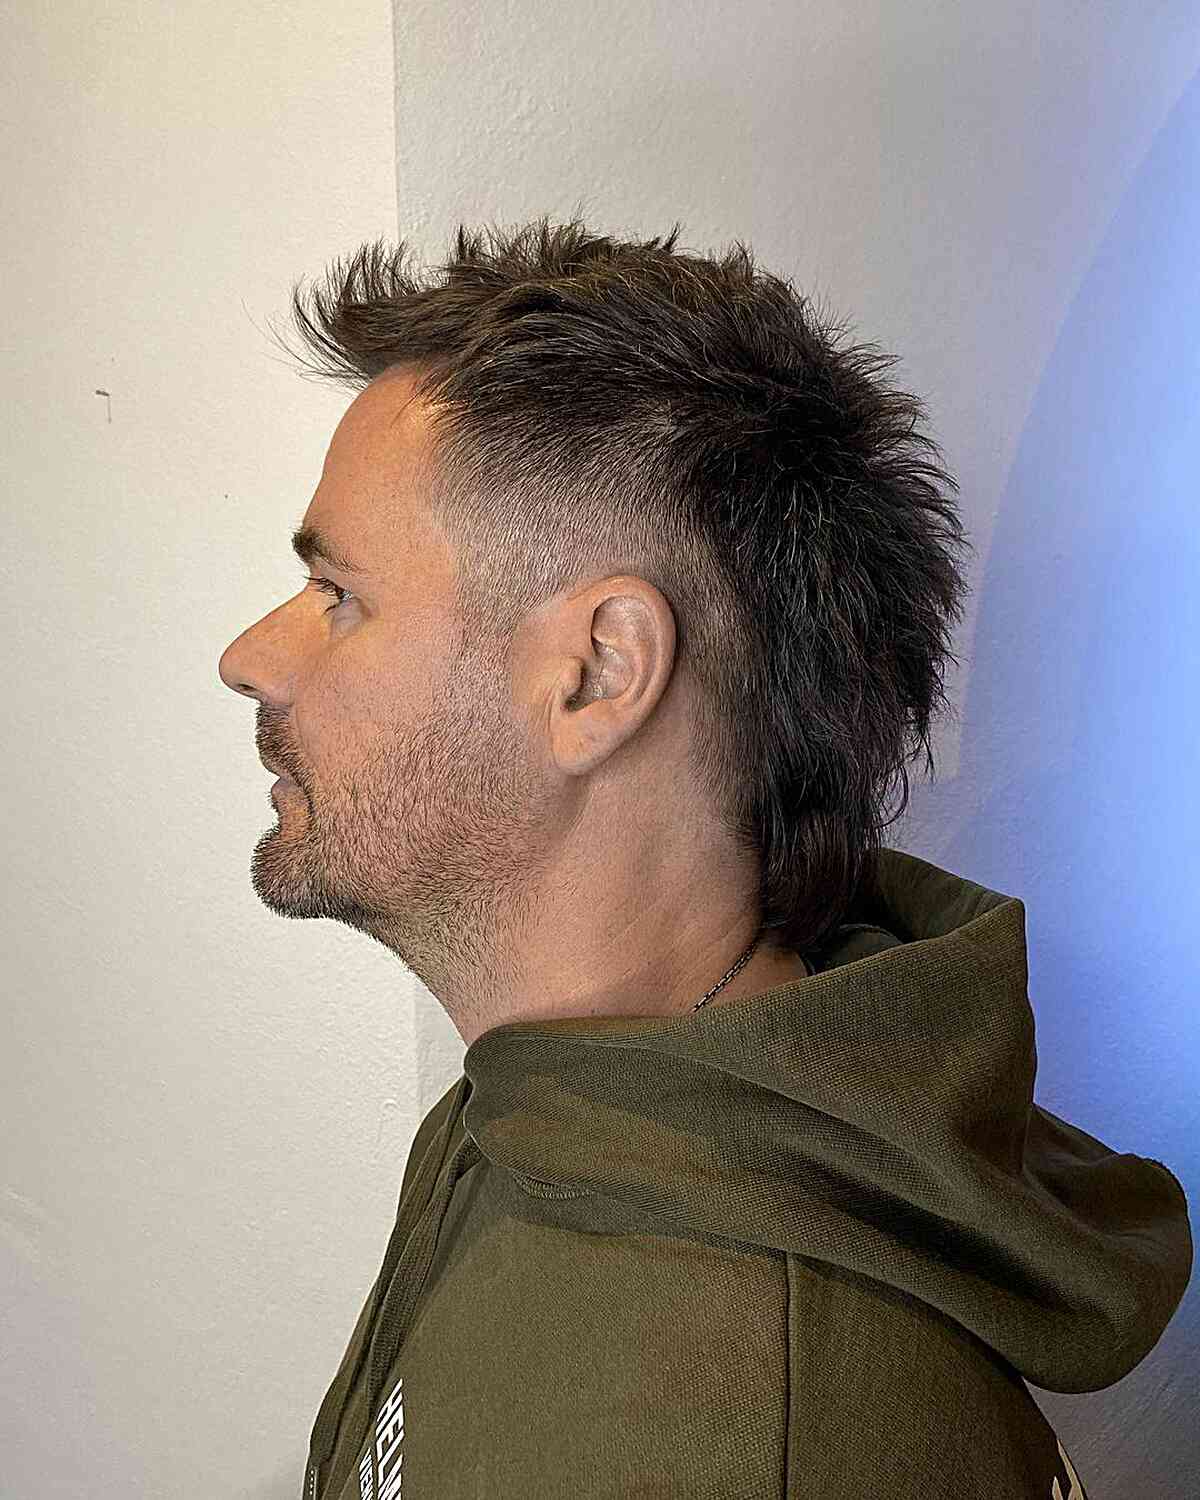 Mohawk fade haircut